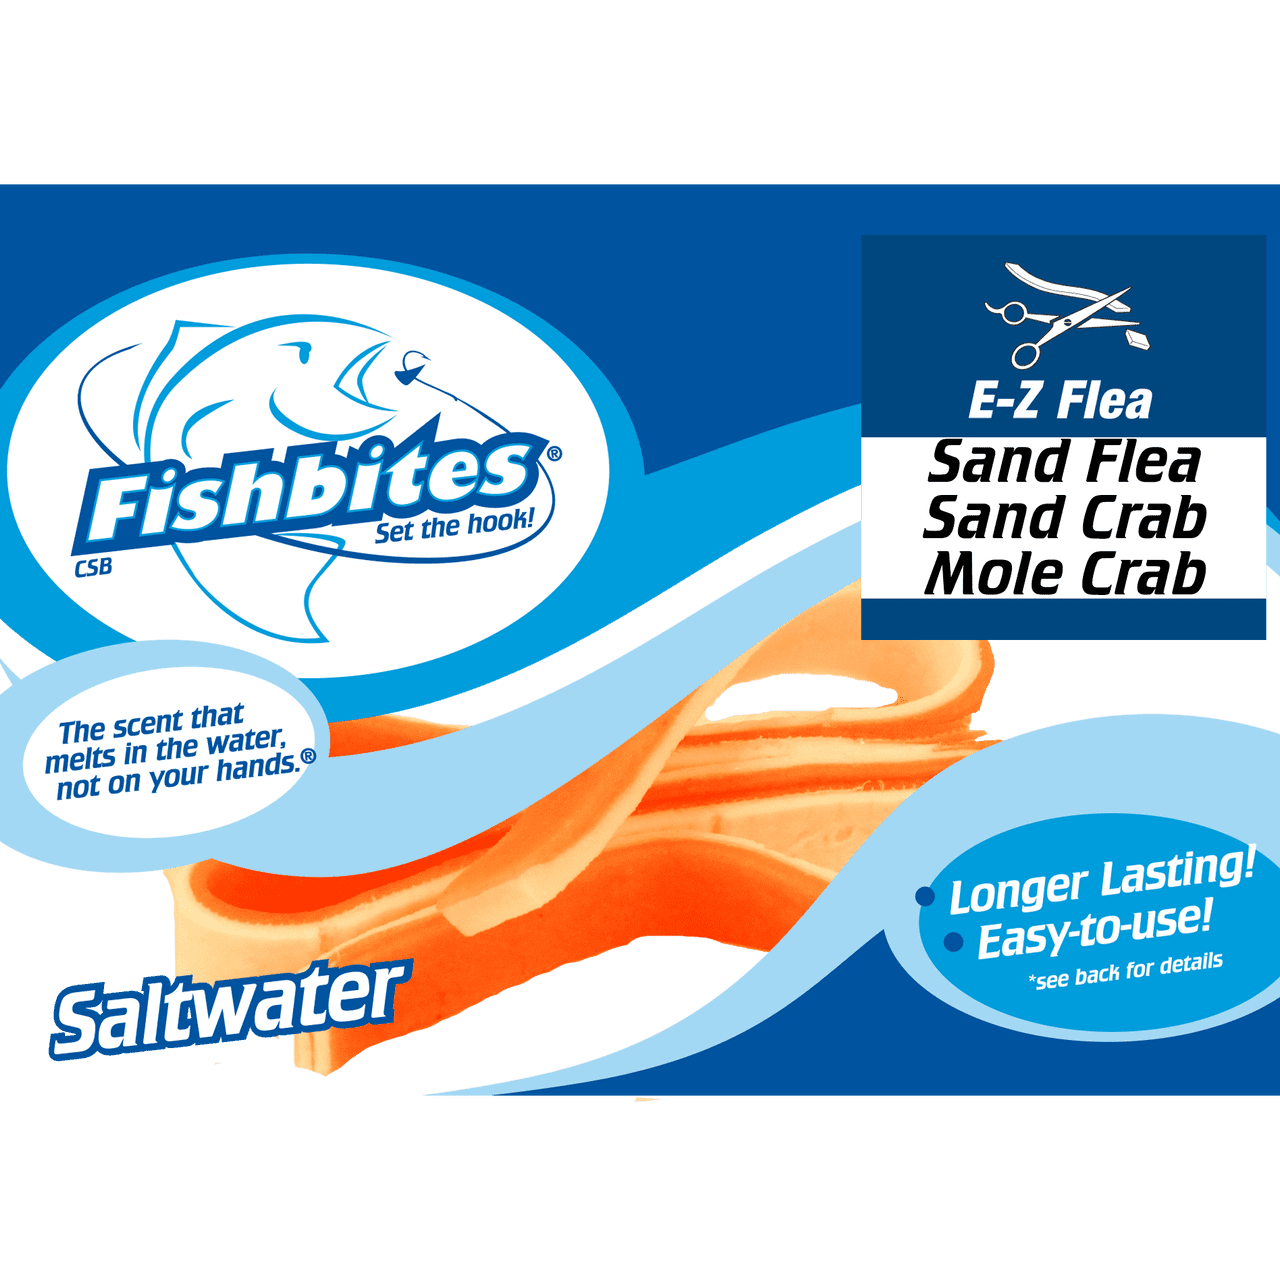 E-Z FLEA FISHBITES® LONGER LASTING